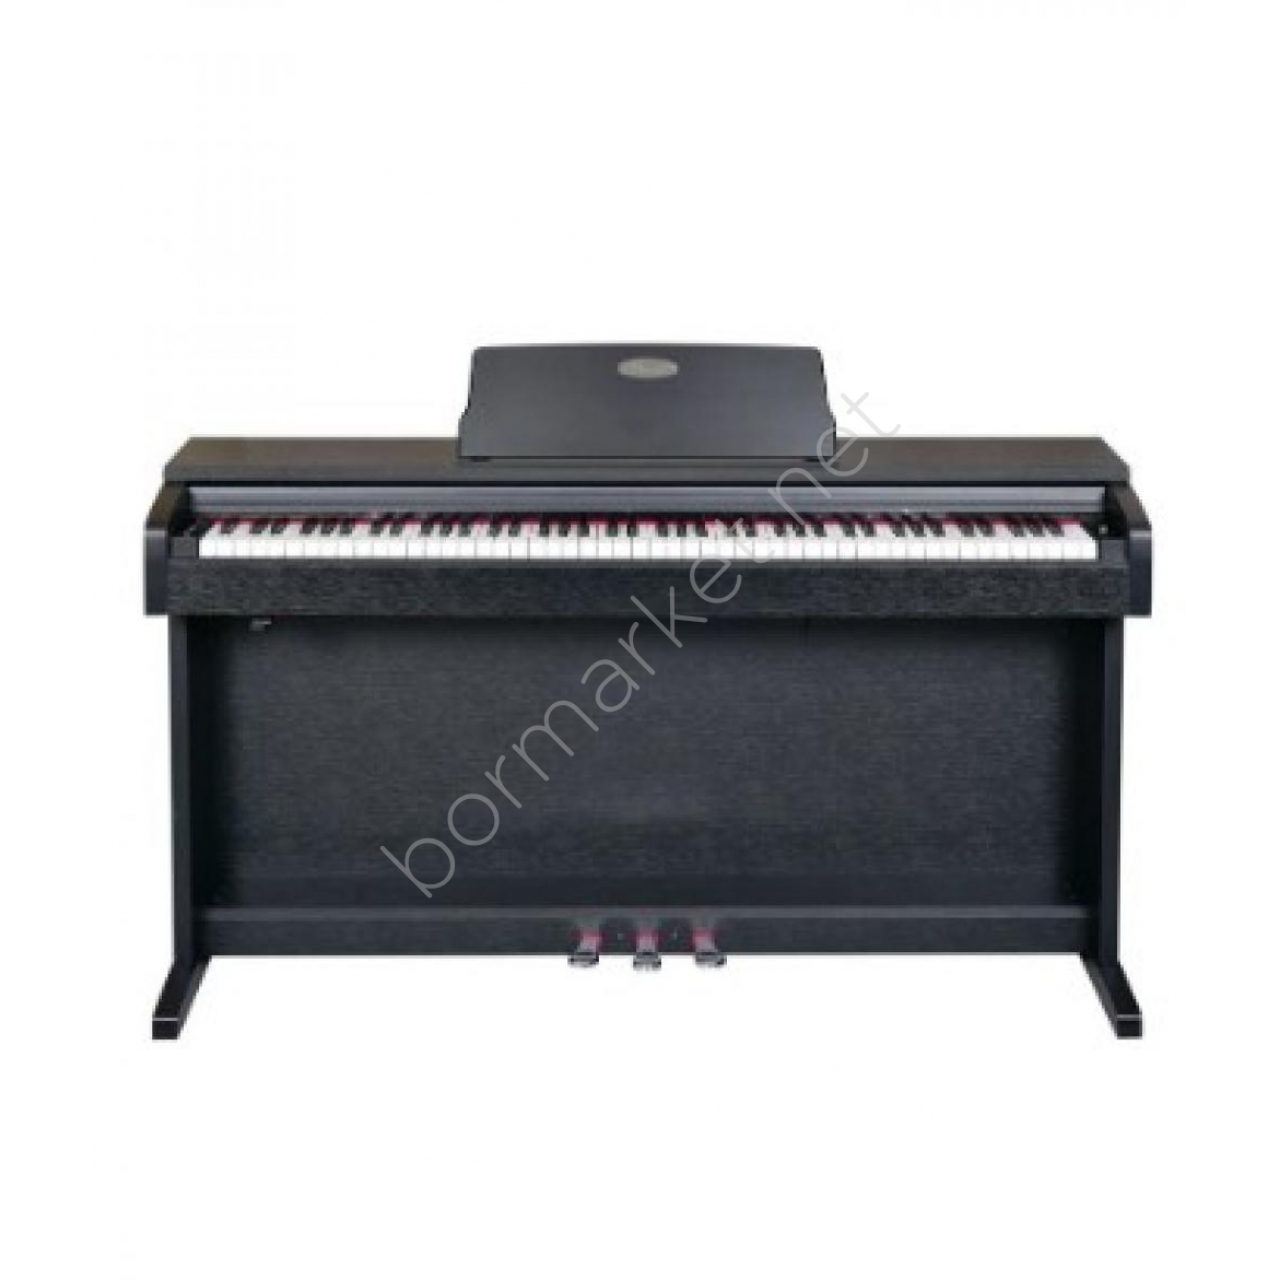 Valler M8X Siyah 88 Tuşlu Dijital Piyano